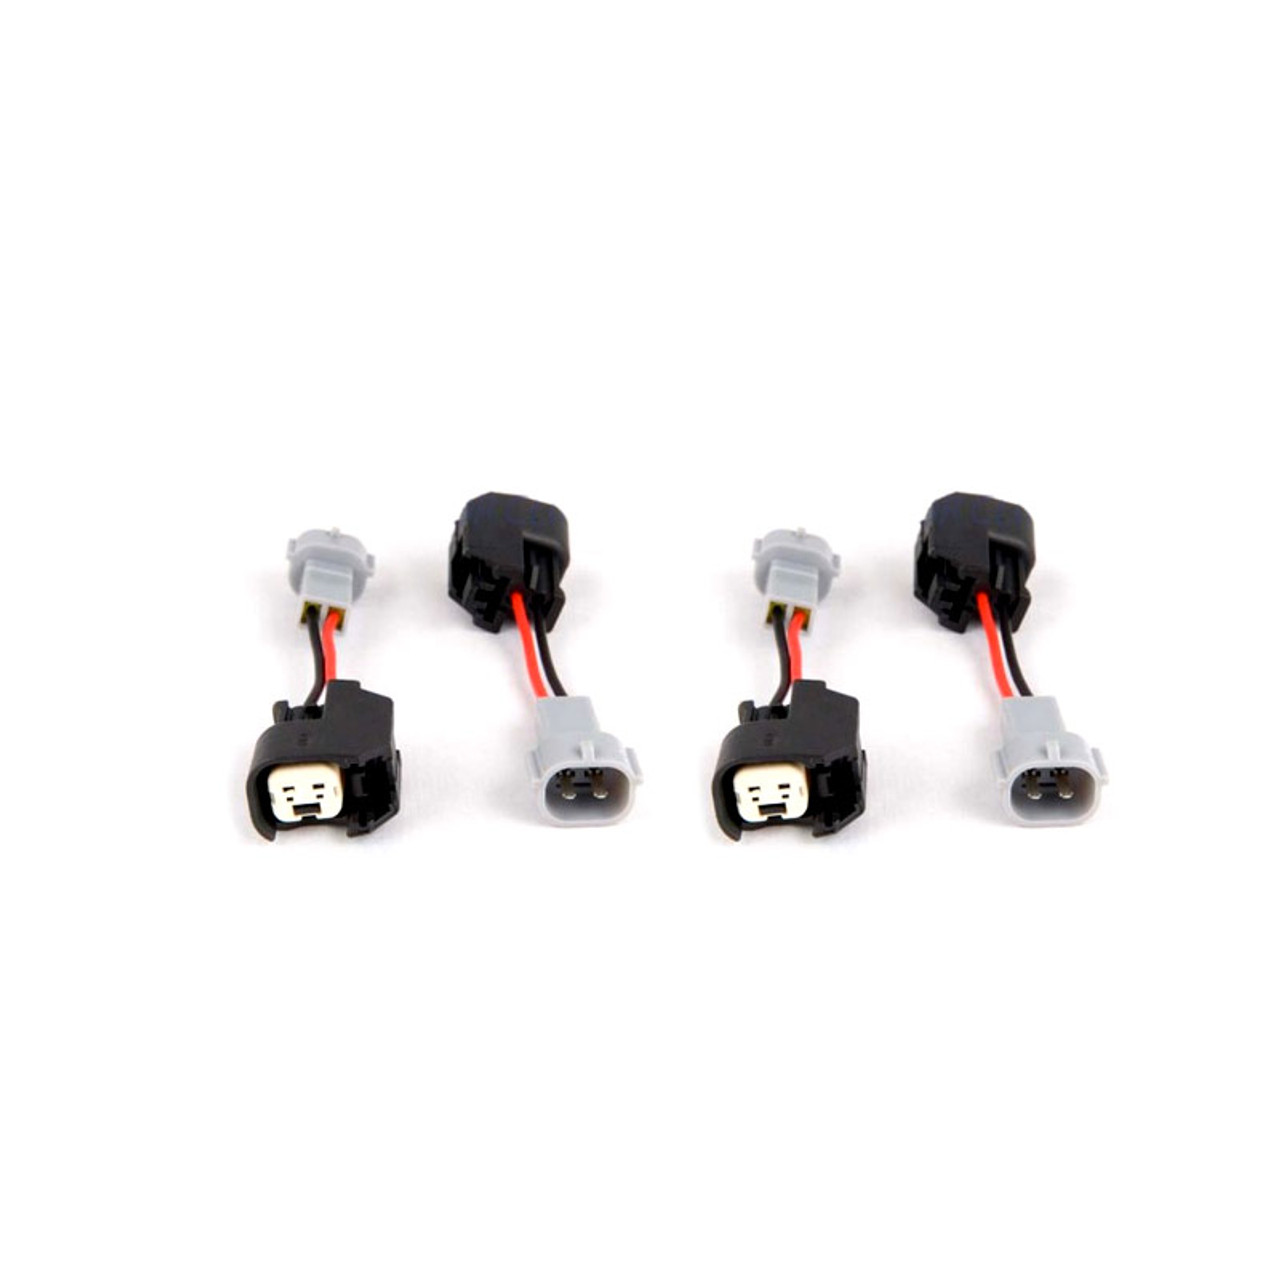 FIC Set of 4 Injector Plug Adaptors - US Car/EV6 (Female) to Denso (Male)